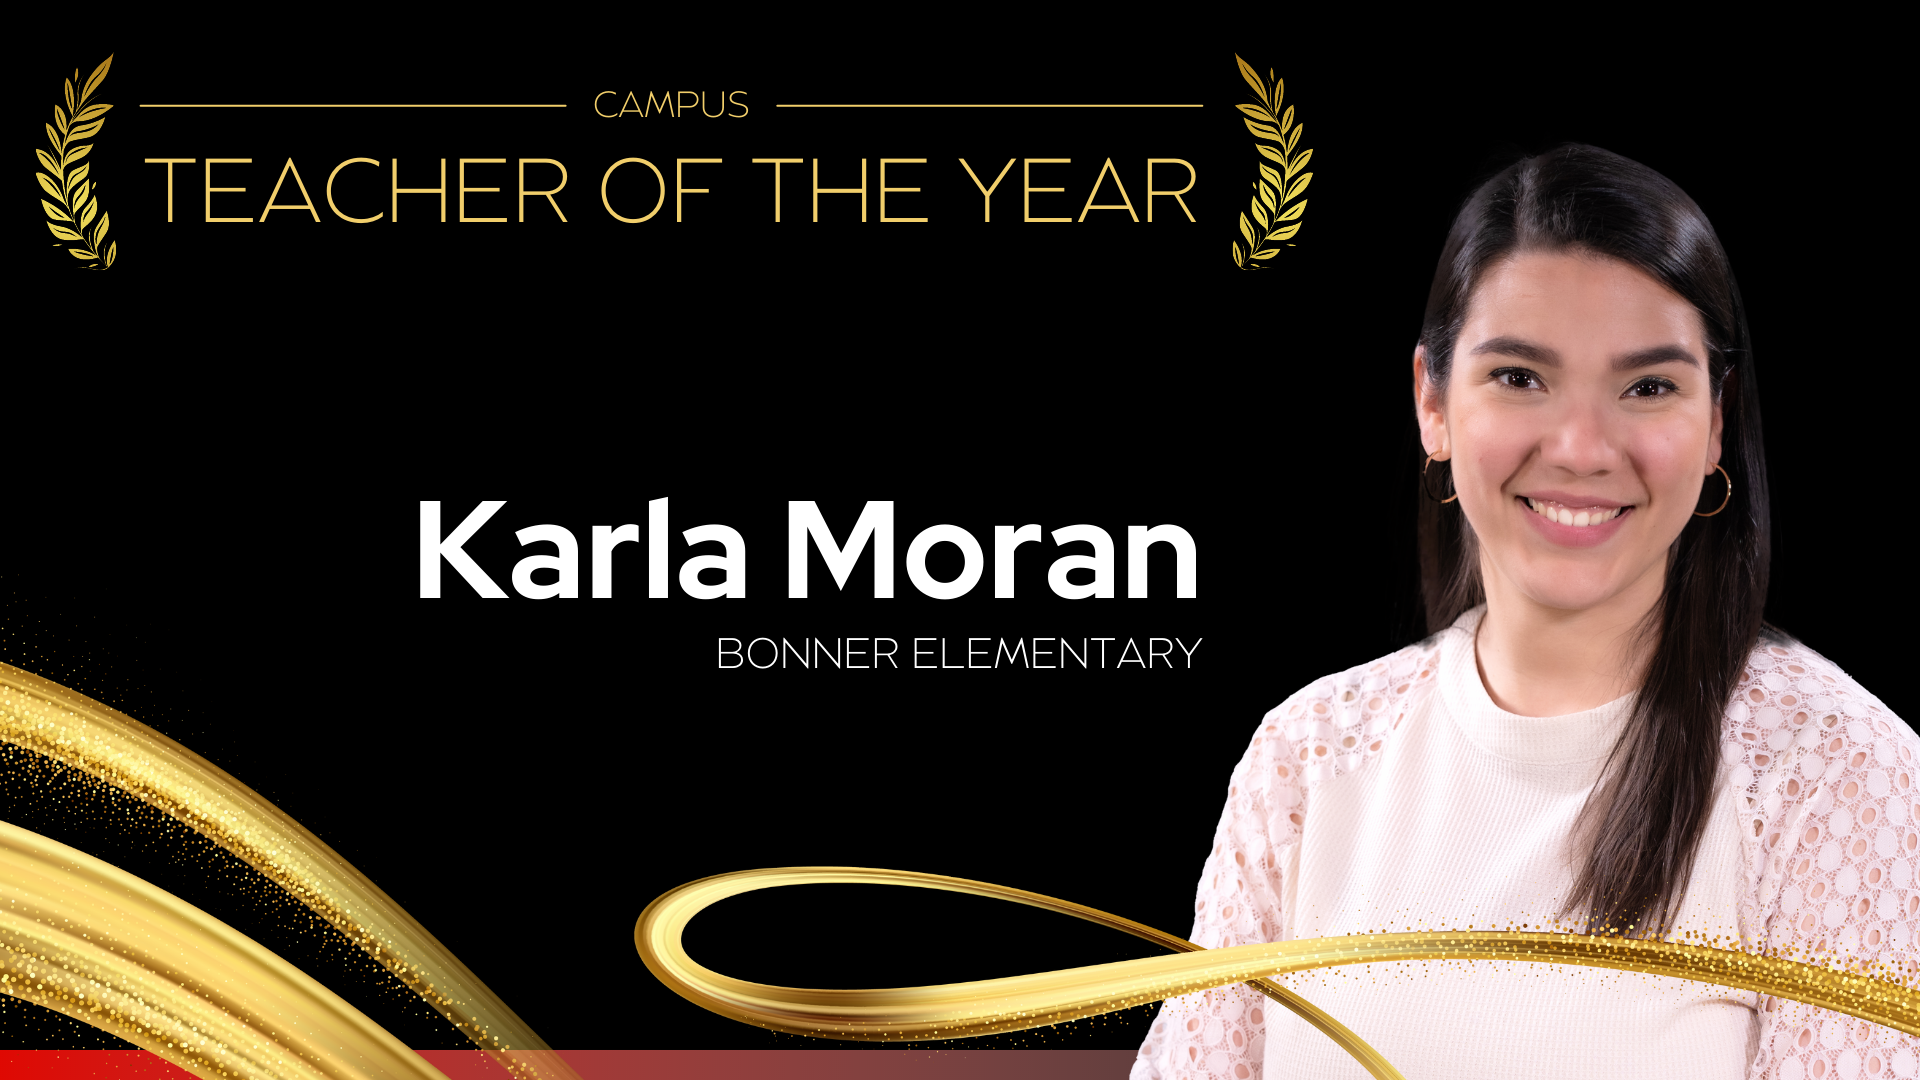 Campus Teacher of the Year Karla Moran - Bonner Elementary